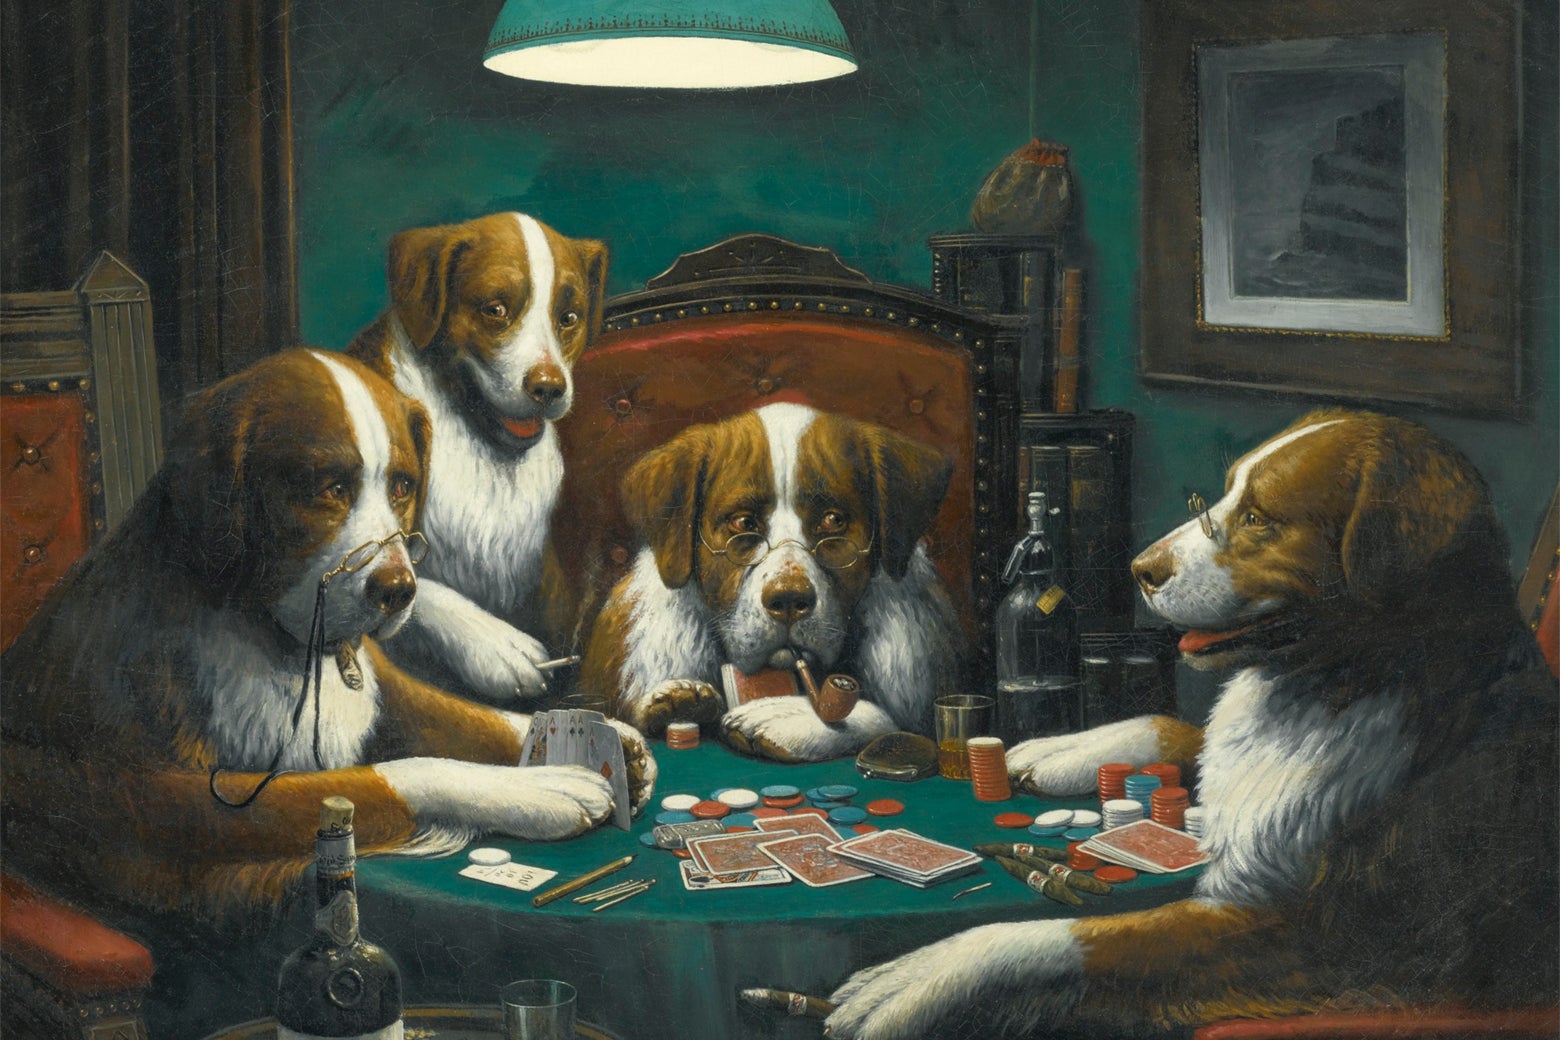 Dogs playing poker.